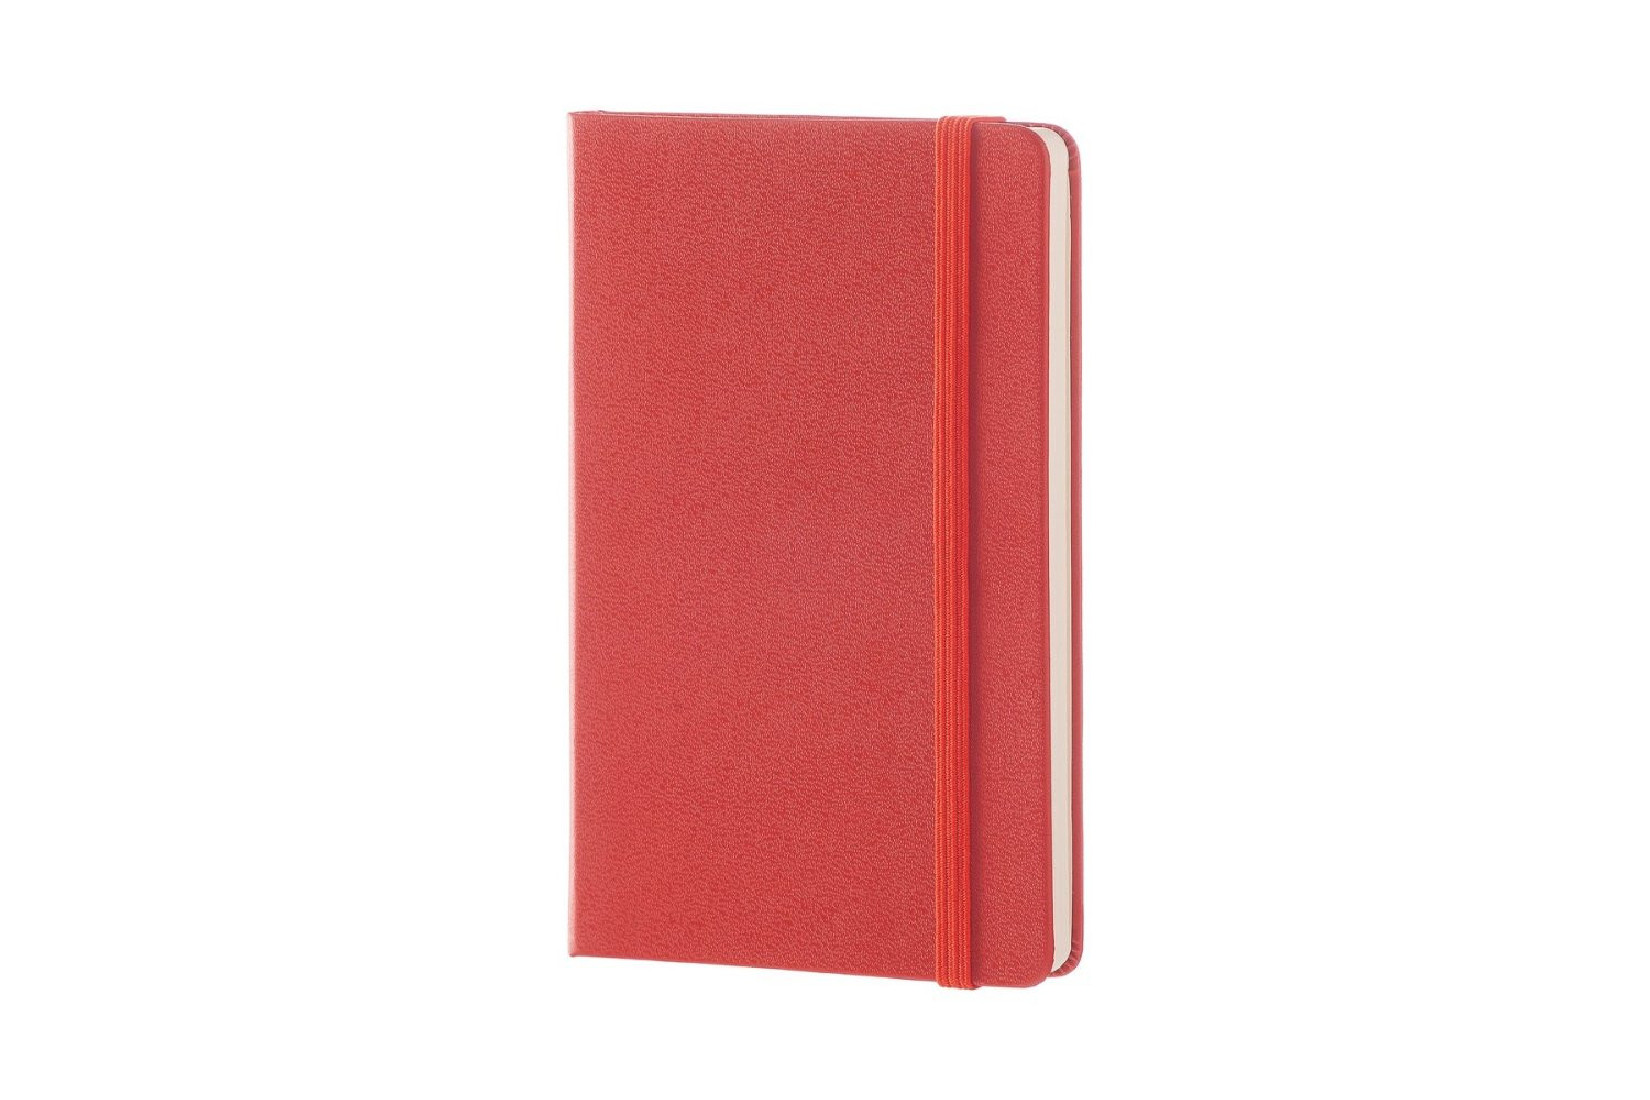 Notebook Pocket 9x14 Squared Coral Orange Hard Cover Moleskine